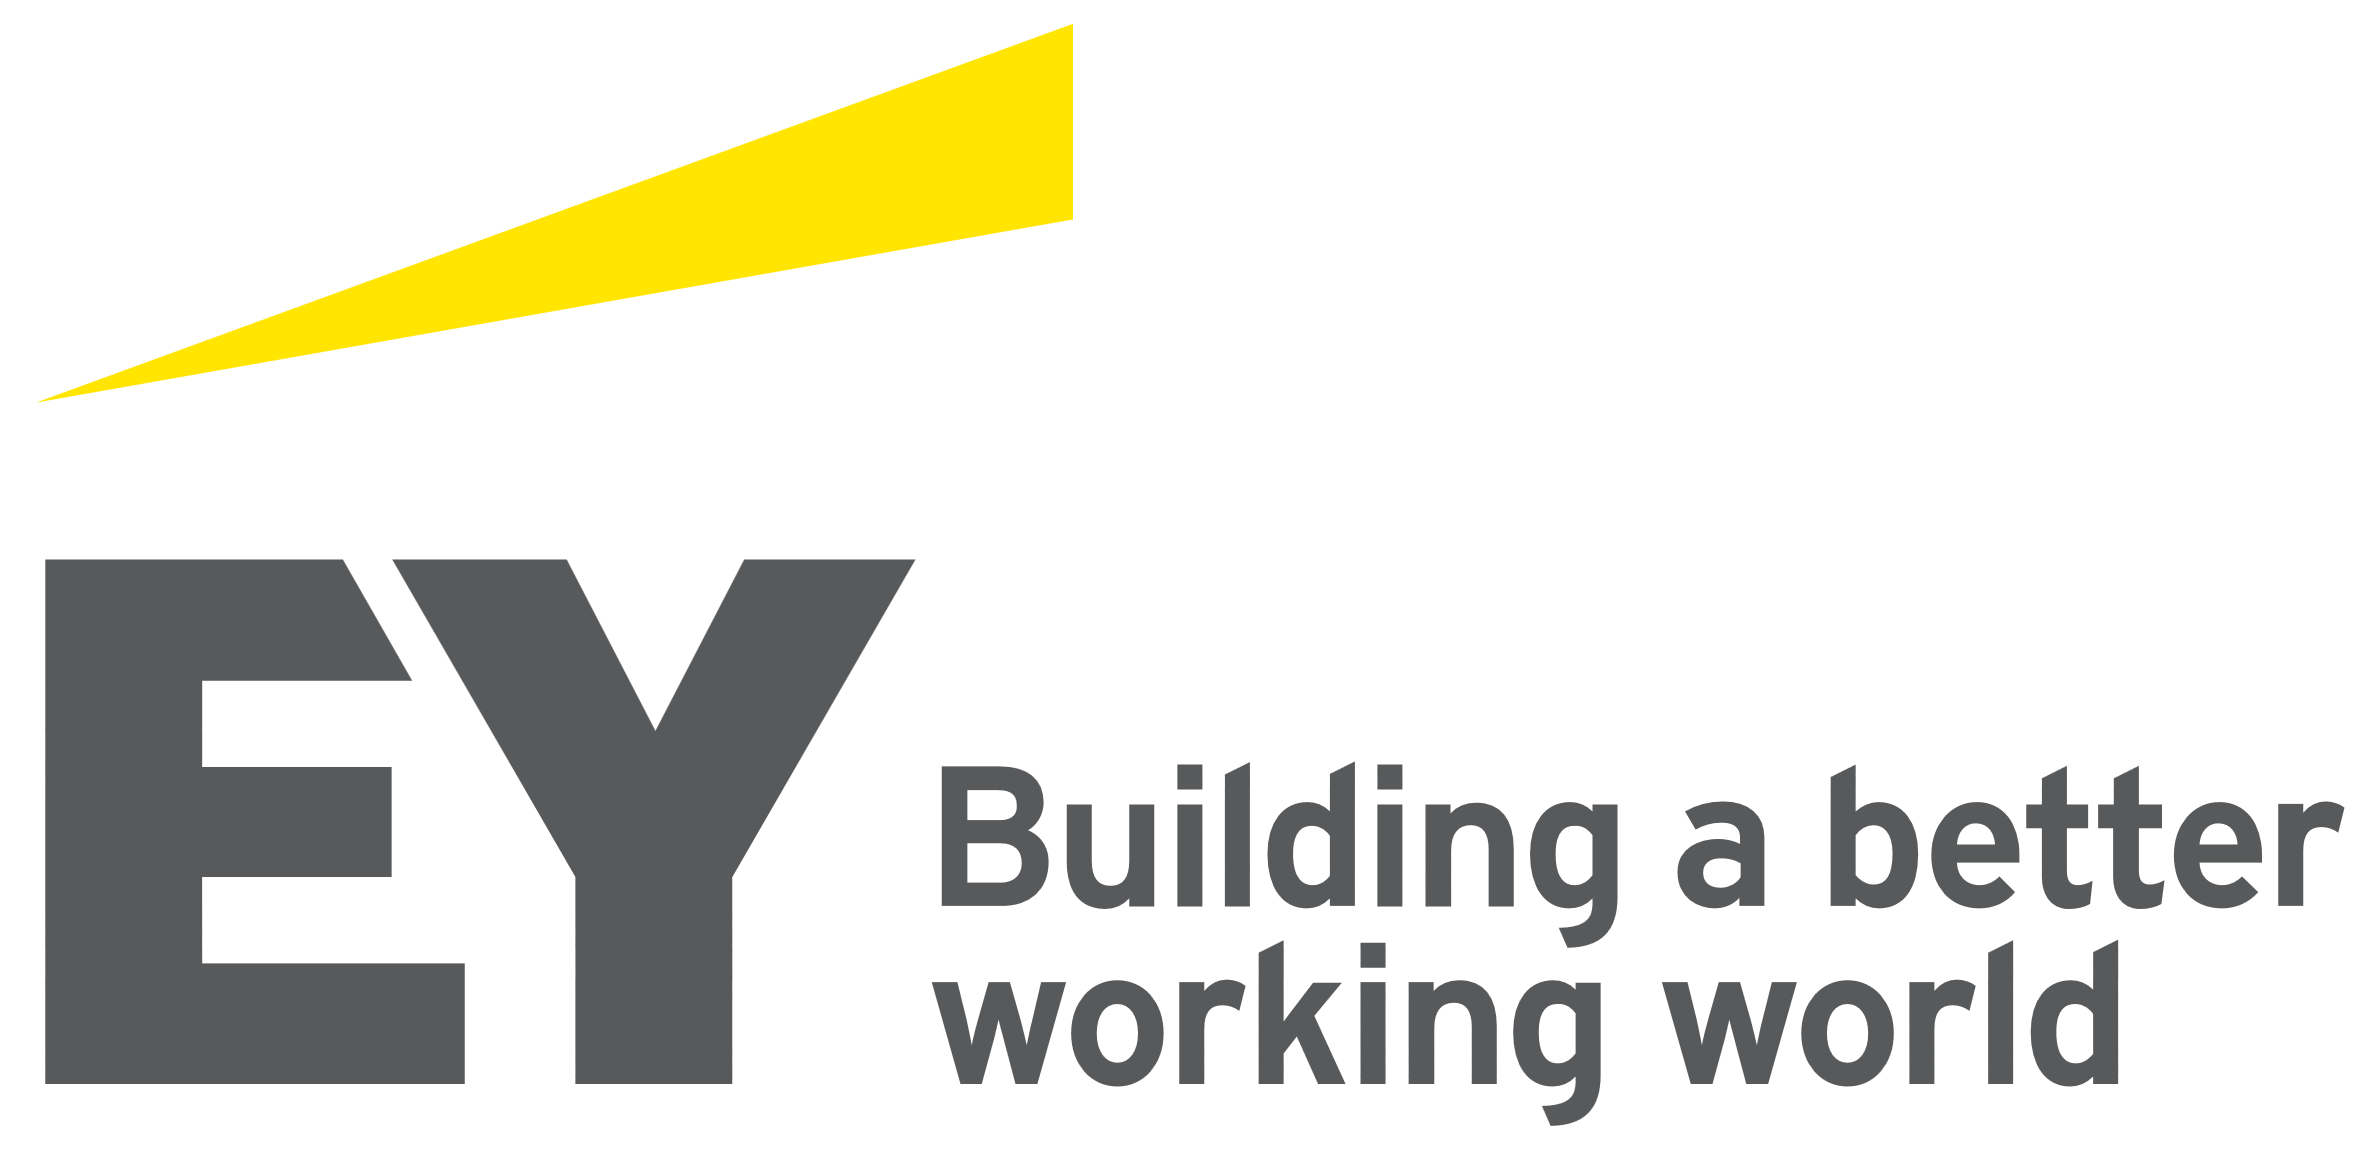 EY - Ernst & Young logo, logotype